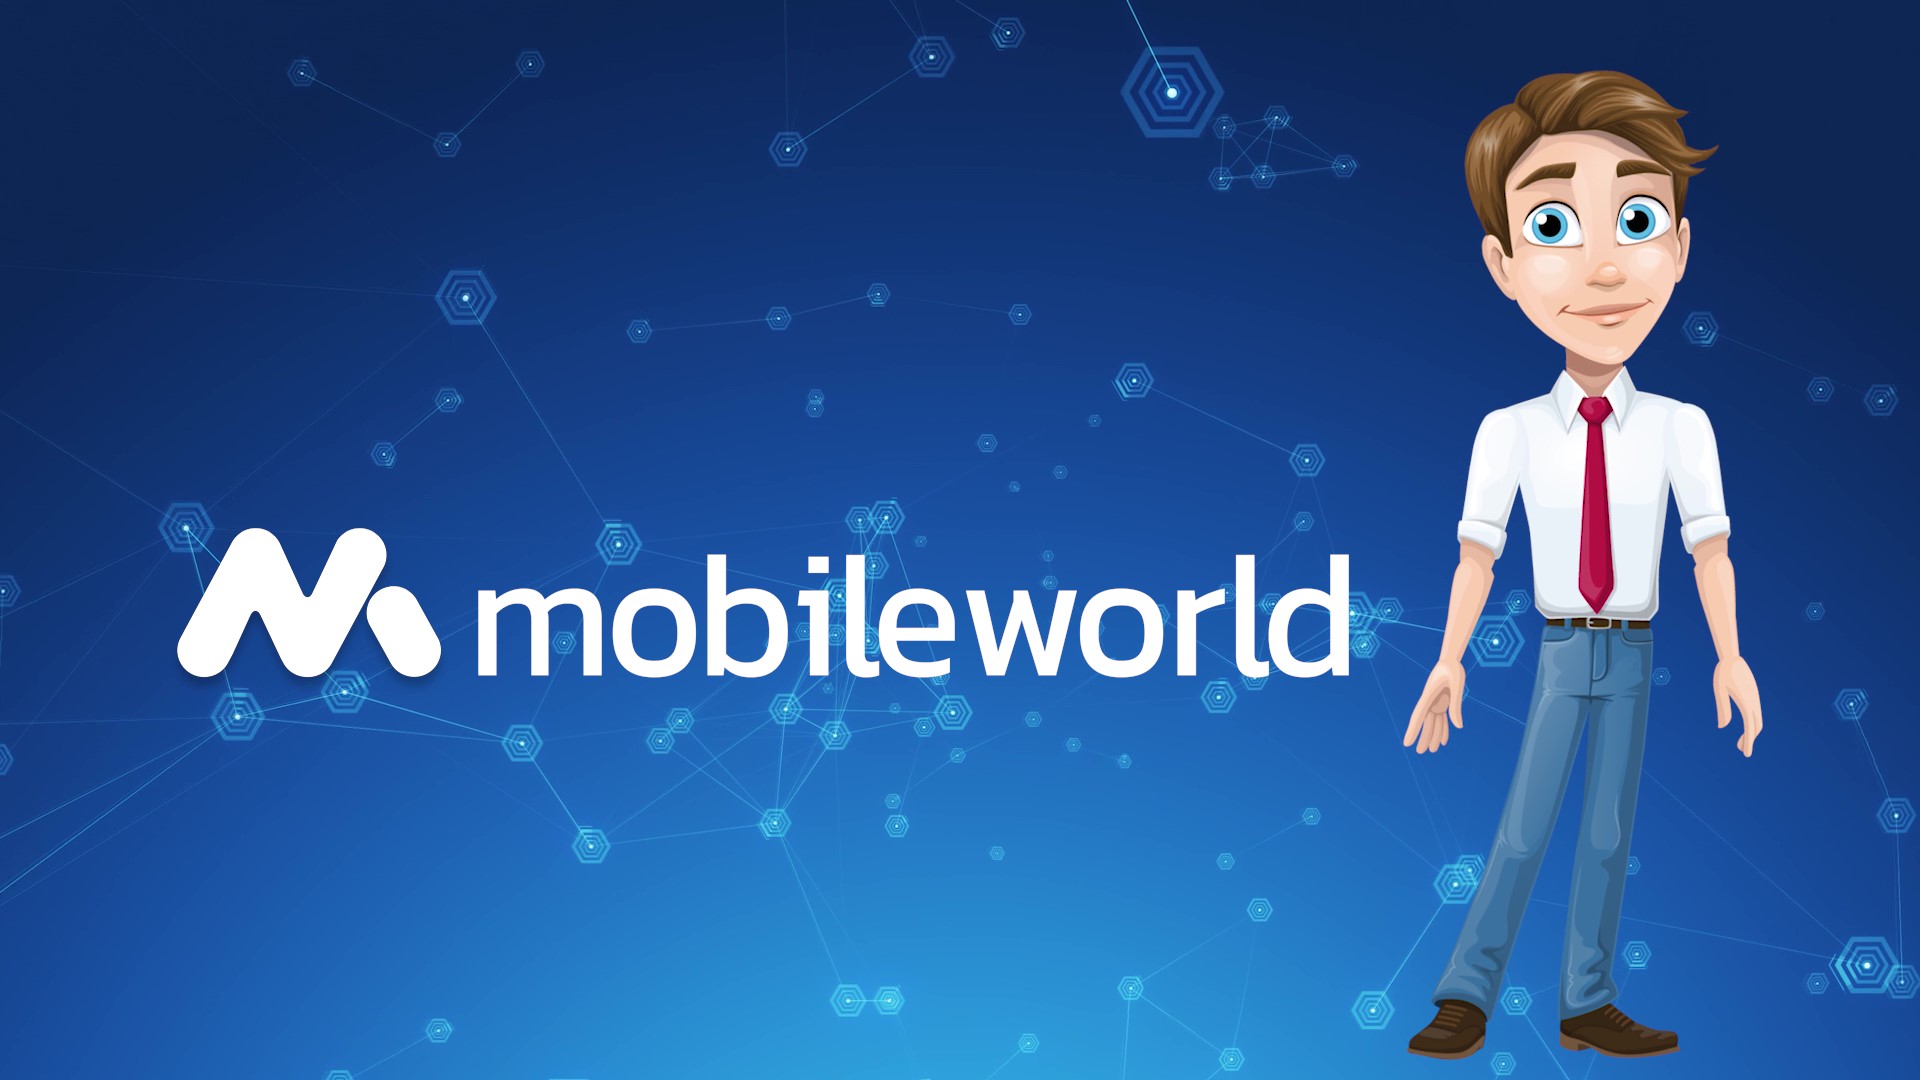 mobileworld | EX VAN, SFA, LOGISTICS